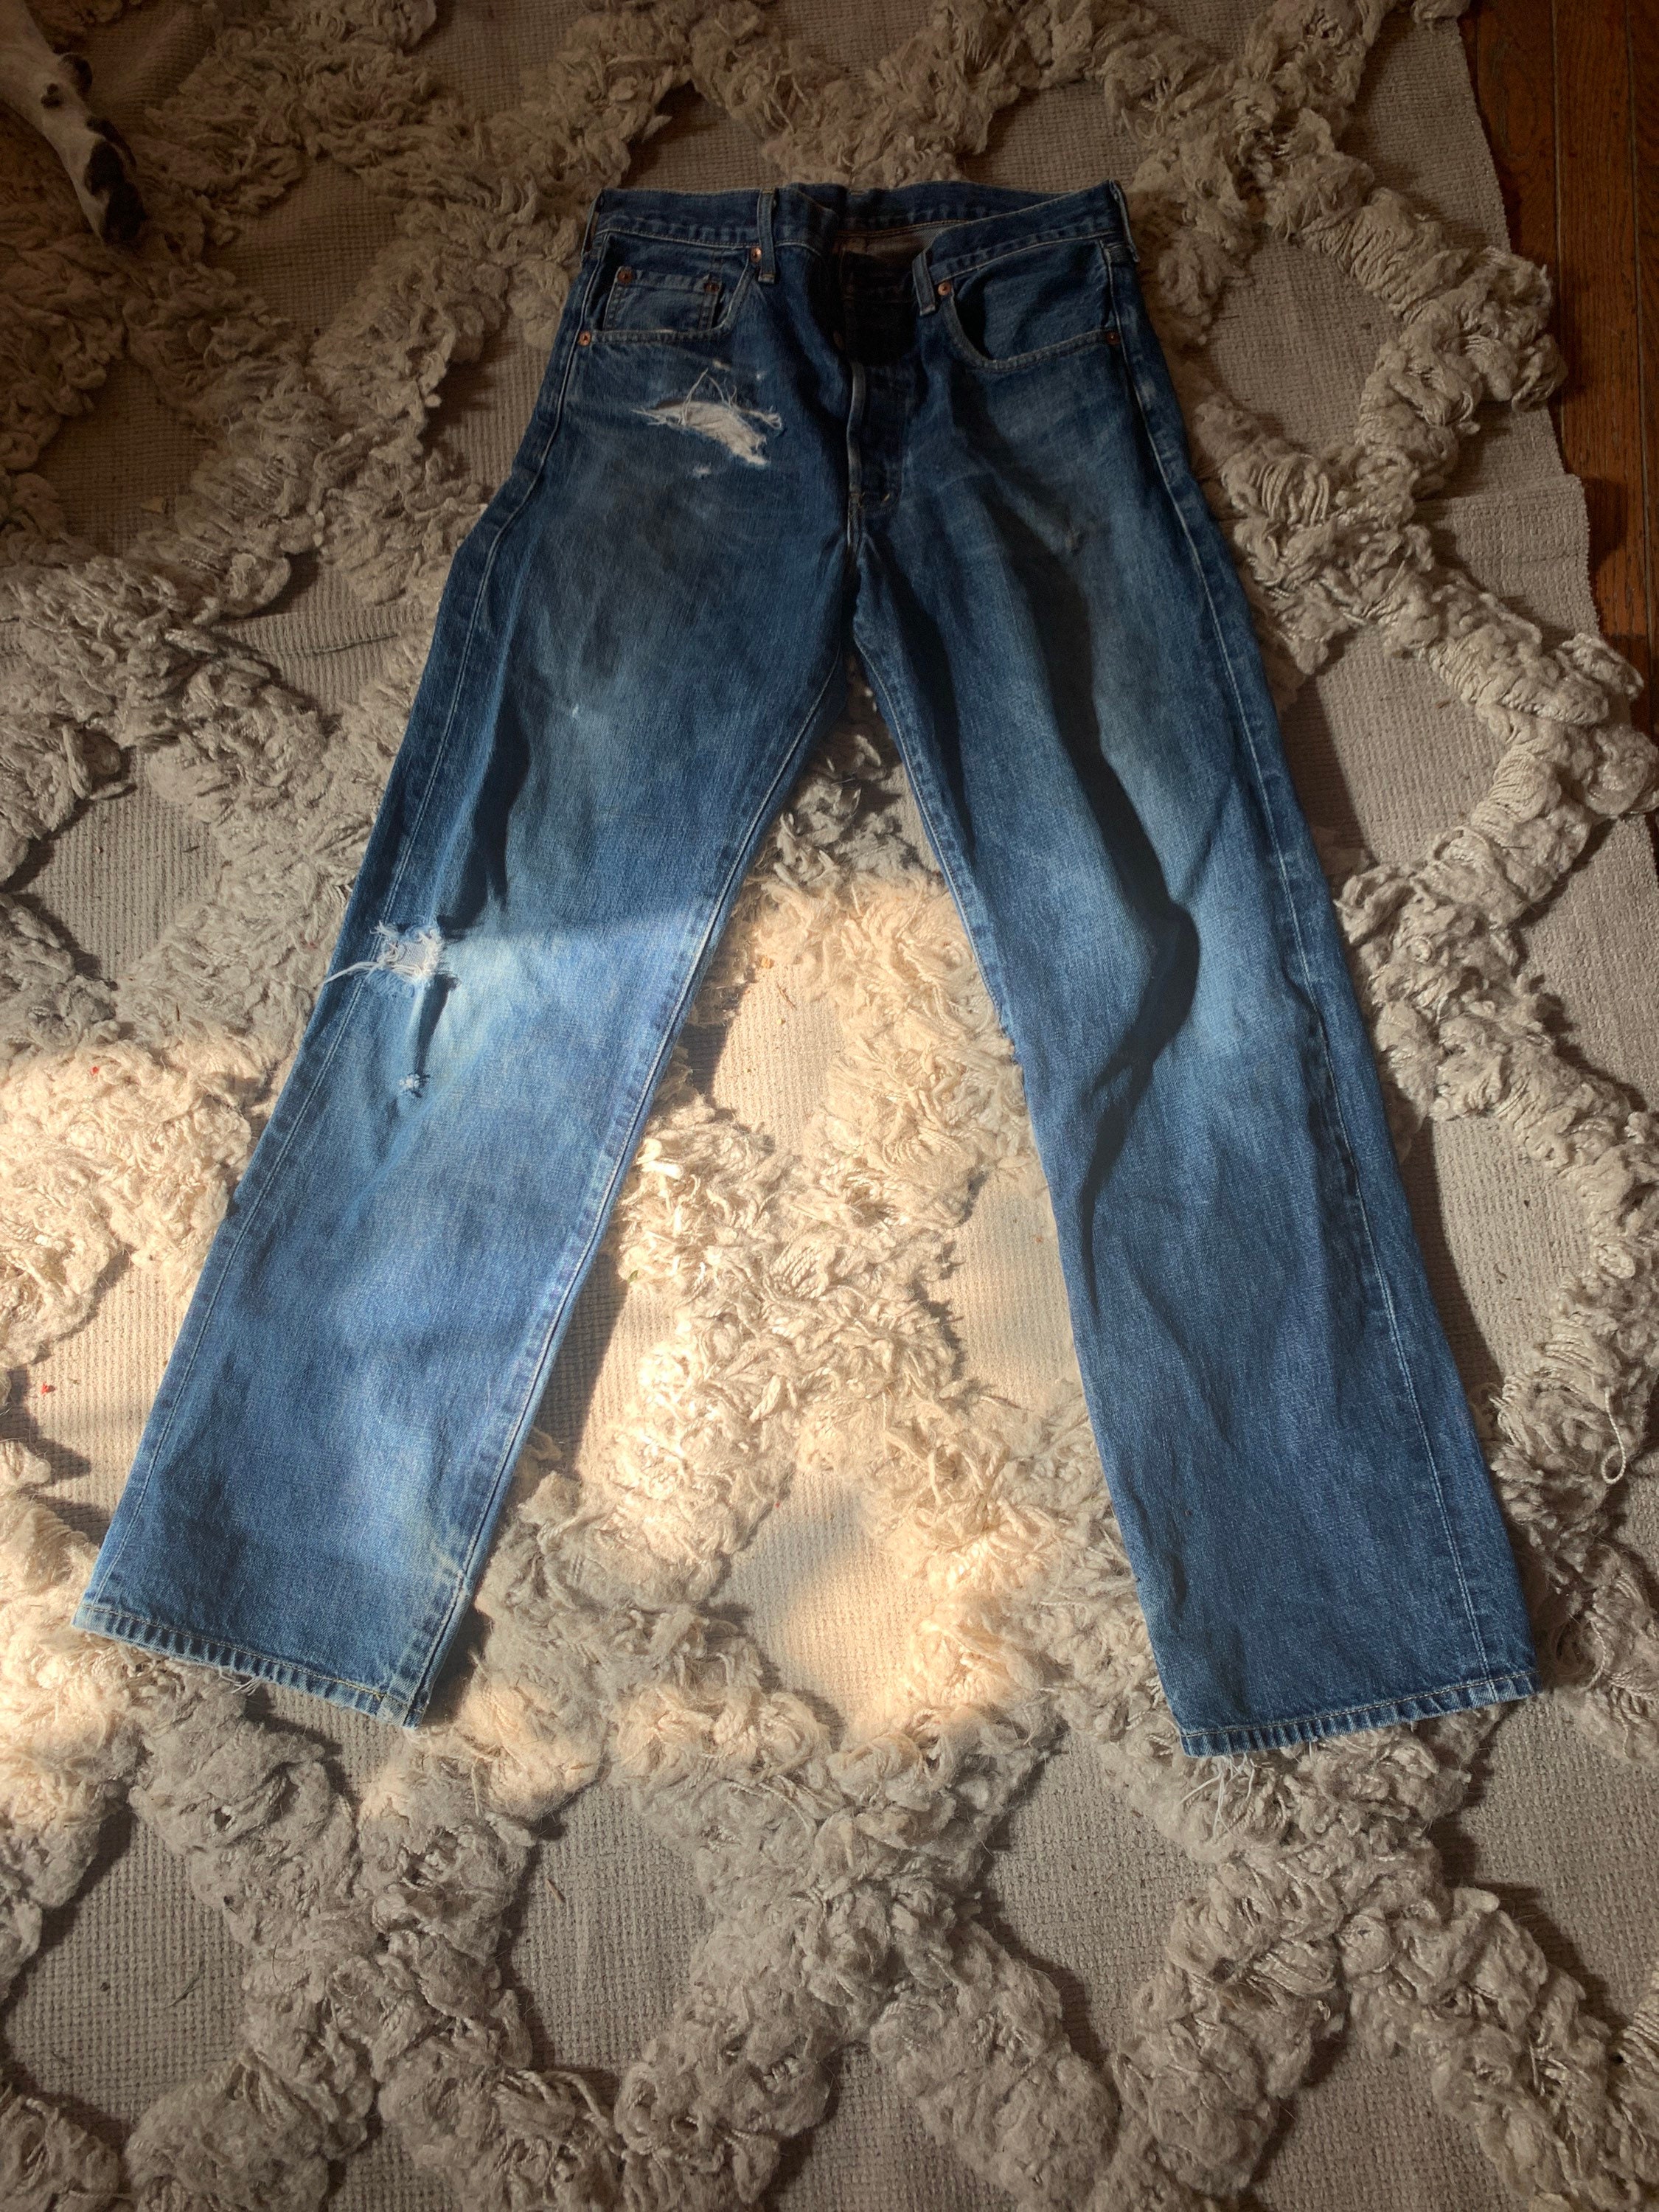 Levis 503 503b Xx Jeans Selvedge Single Stitch Capital E 33 X 36